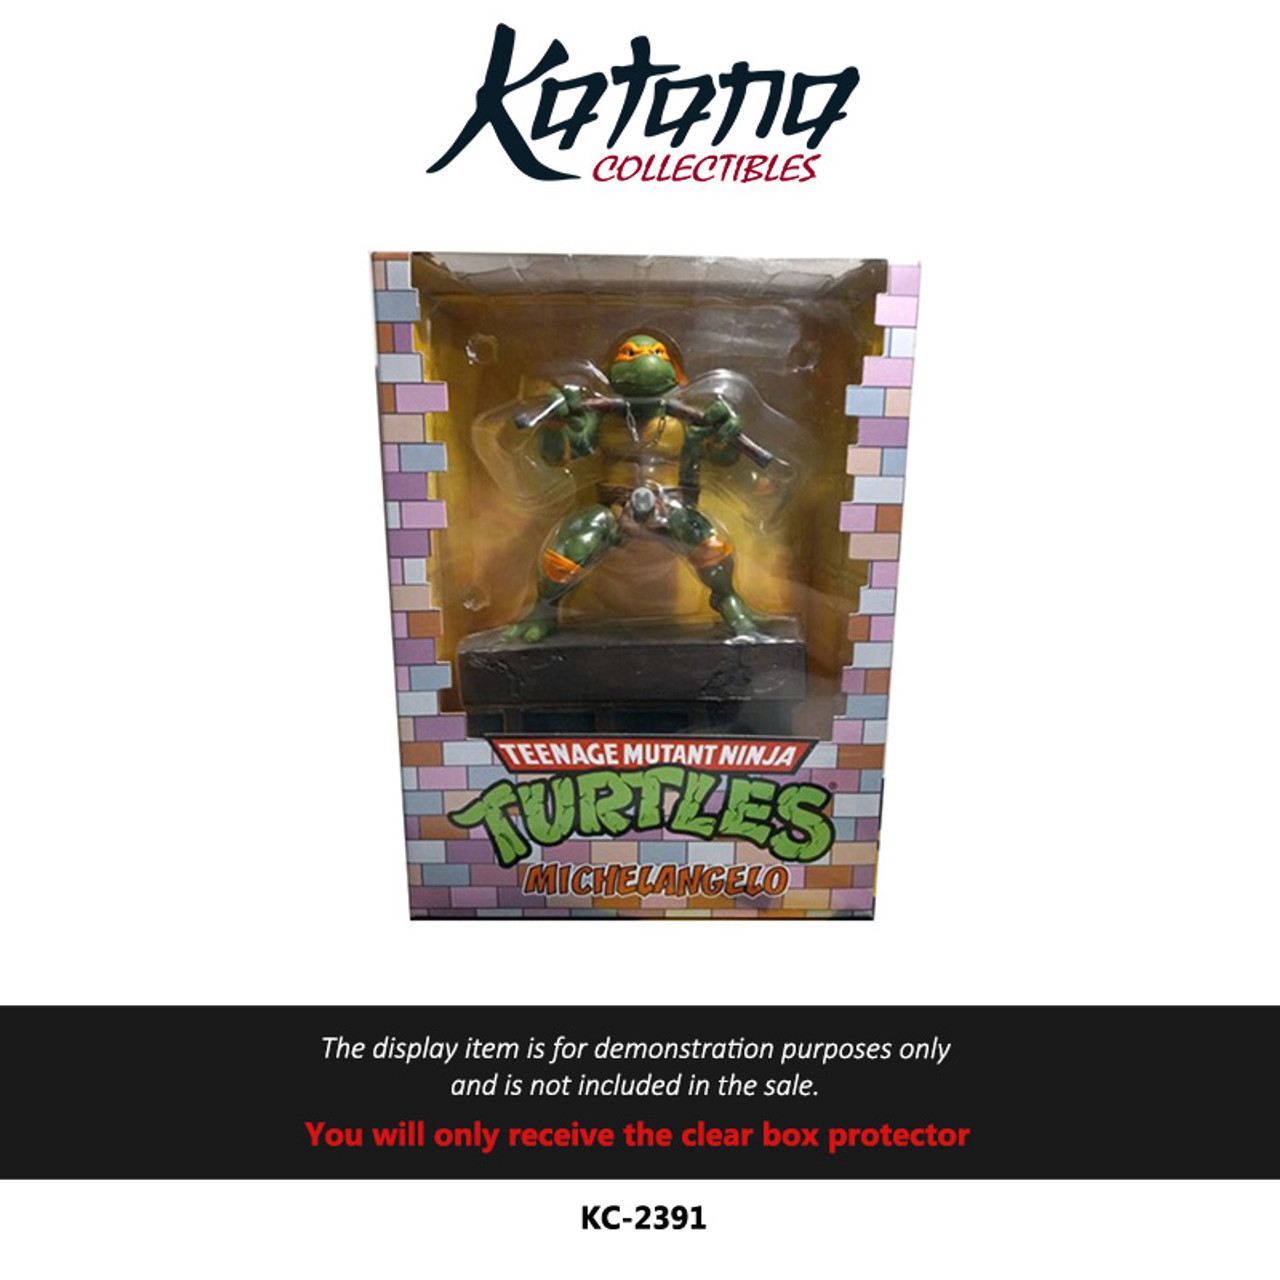 Katana Collectibles Protector For Teenage Mutant Ninja Turtles Classic Michelangelo Figure